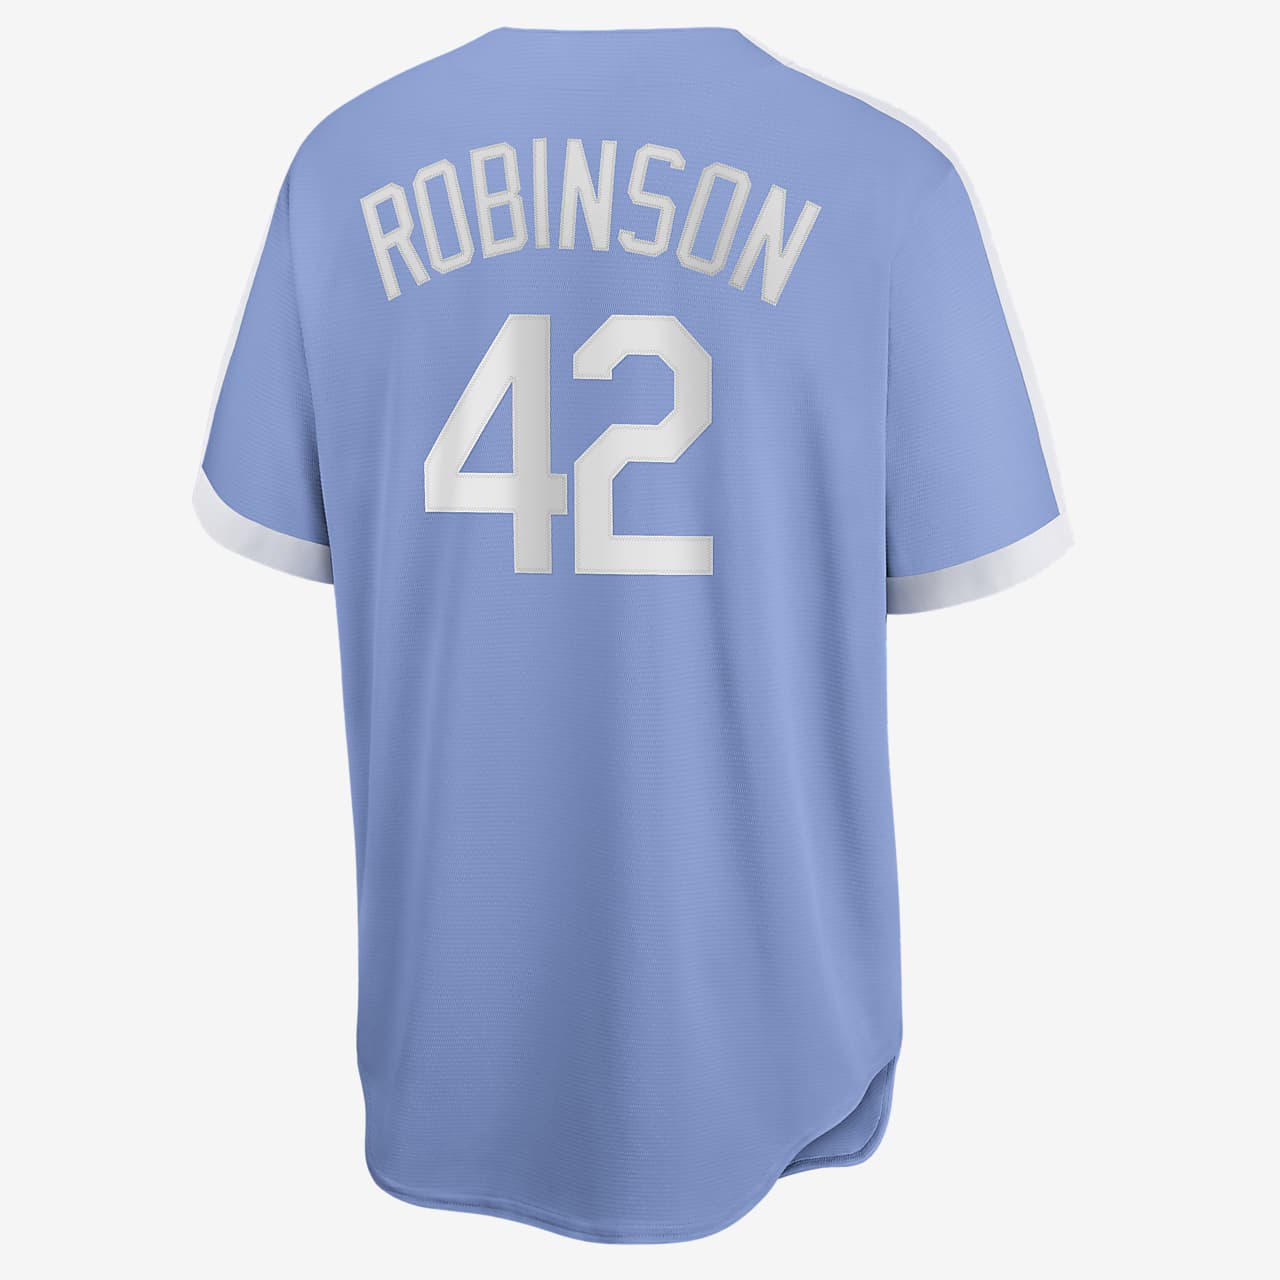 Buy > jackie robinson nike jersey > in stock